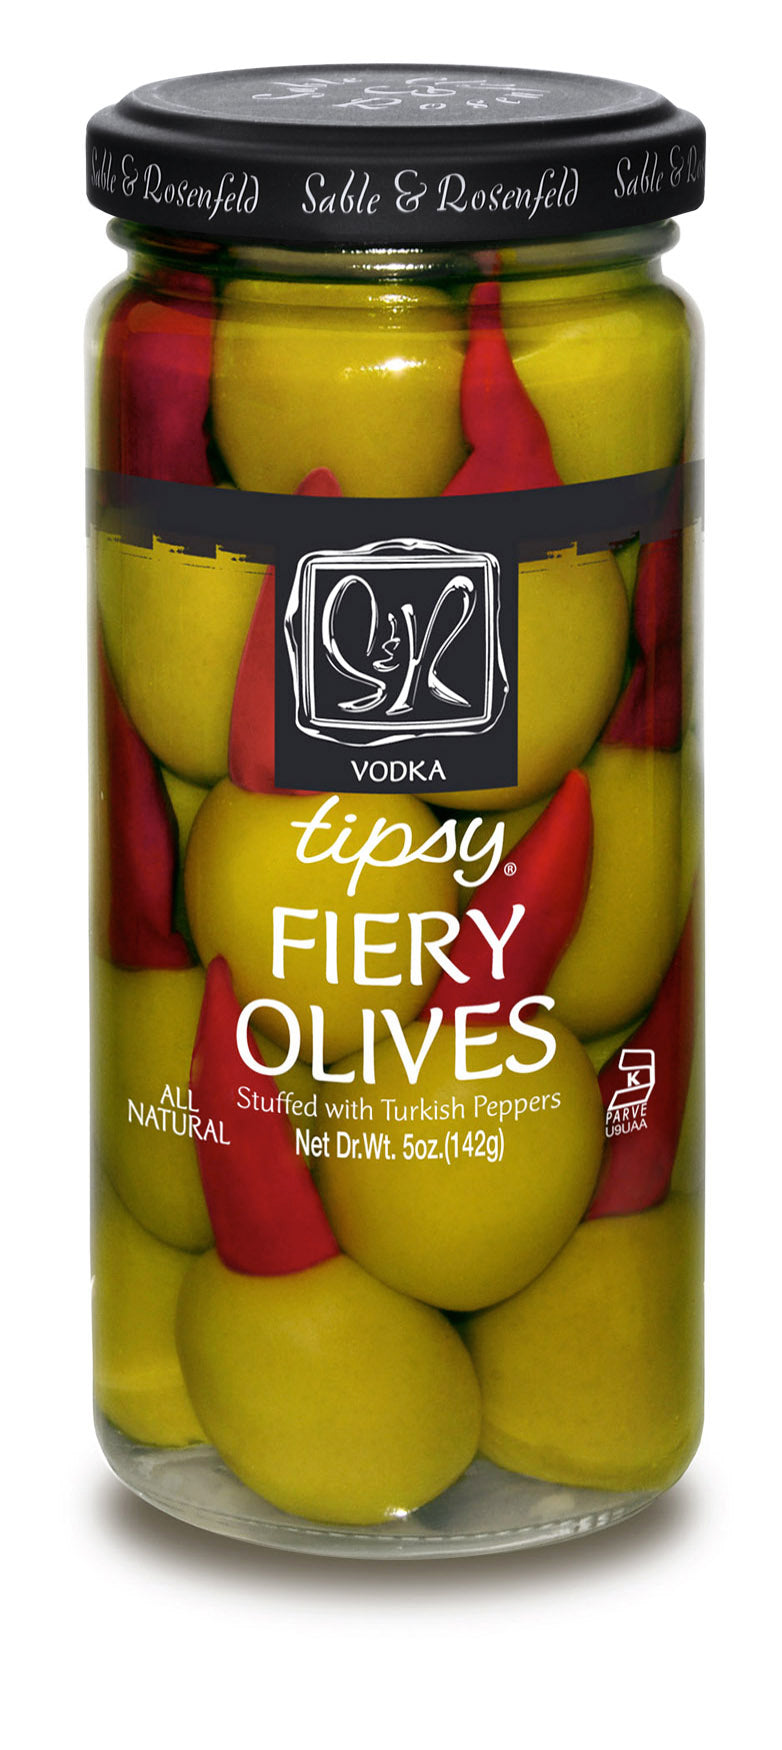 Sable & Rosenfeld - Vodka Tipsy Fiery Olives 250ml